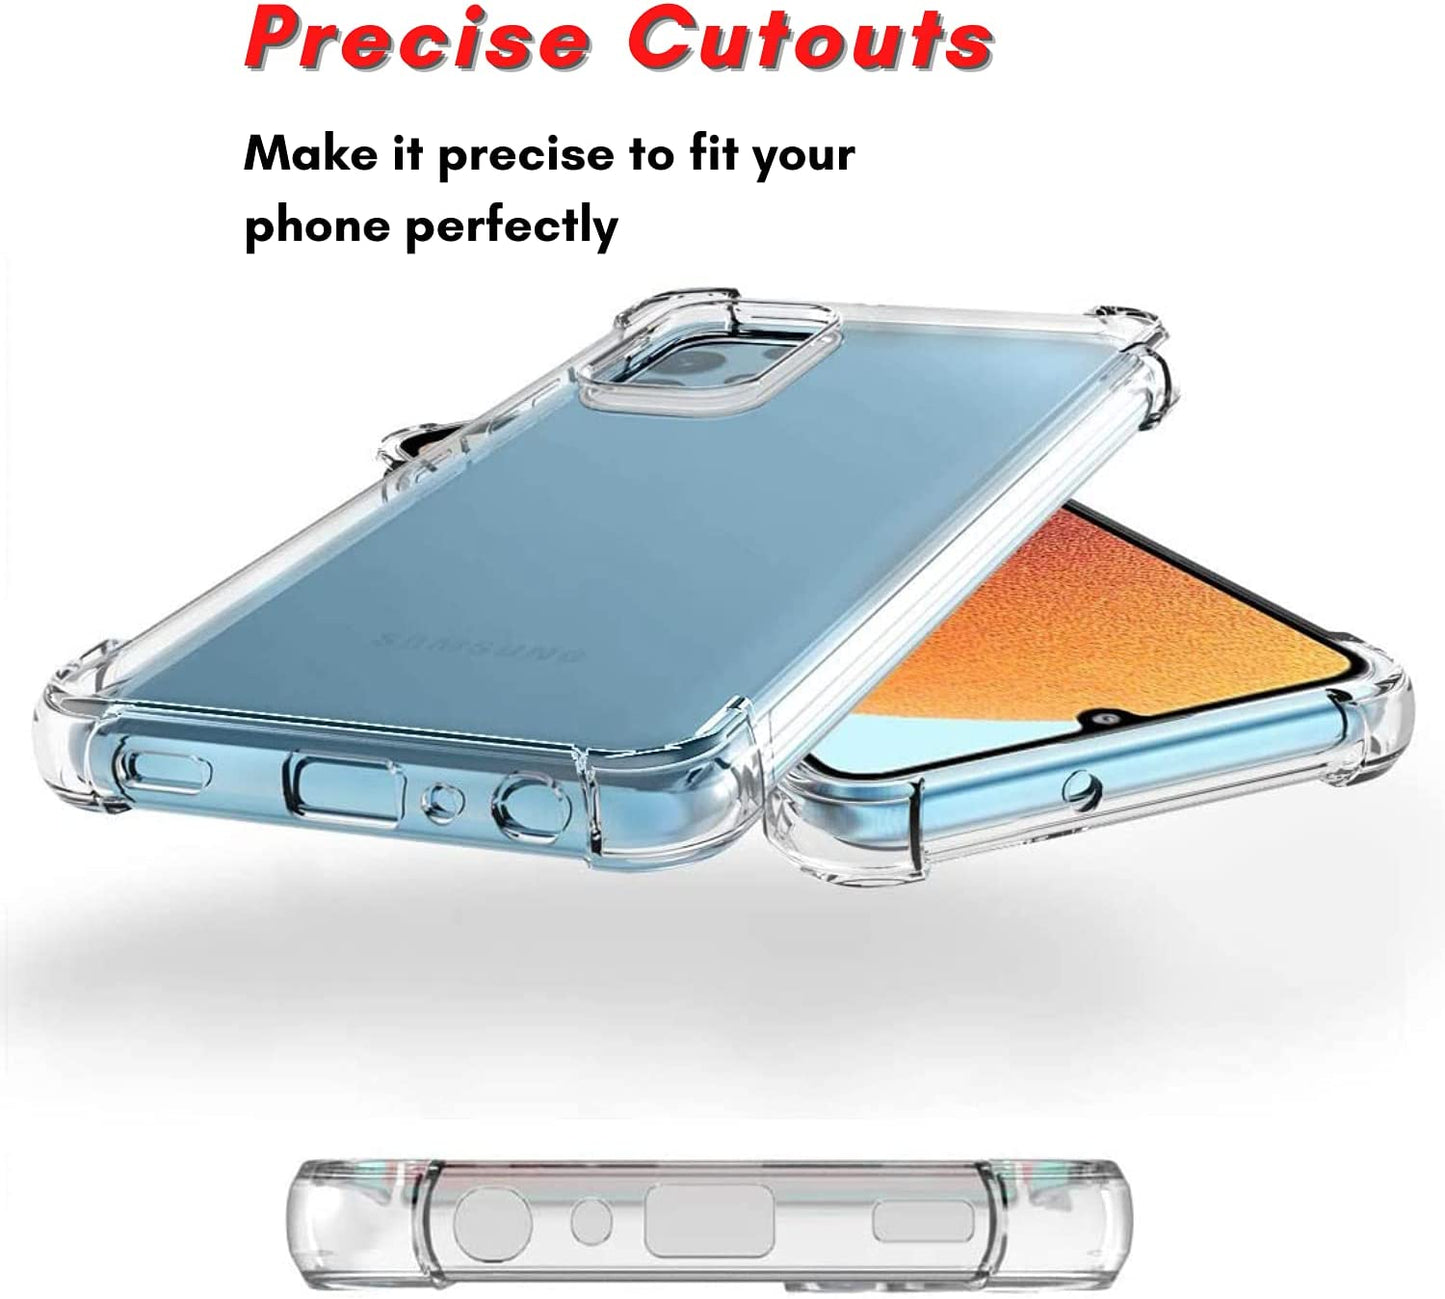 Bulk Clear Shockproof Samsung Cases, Transparent Samsung Bumper Covers